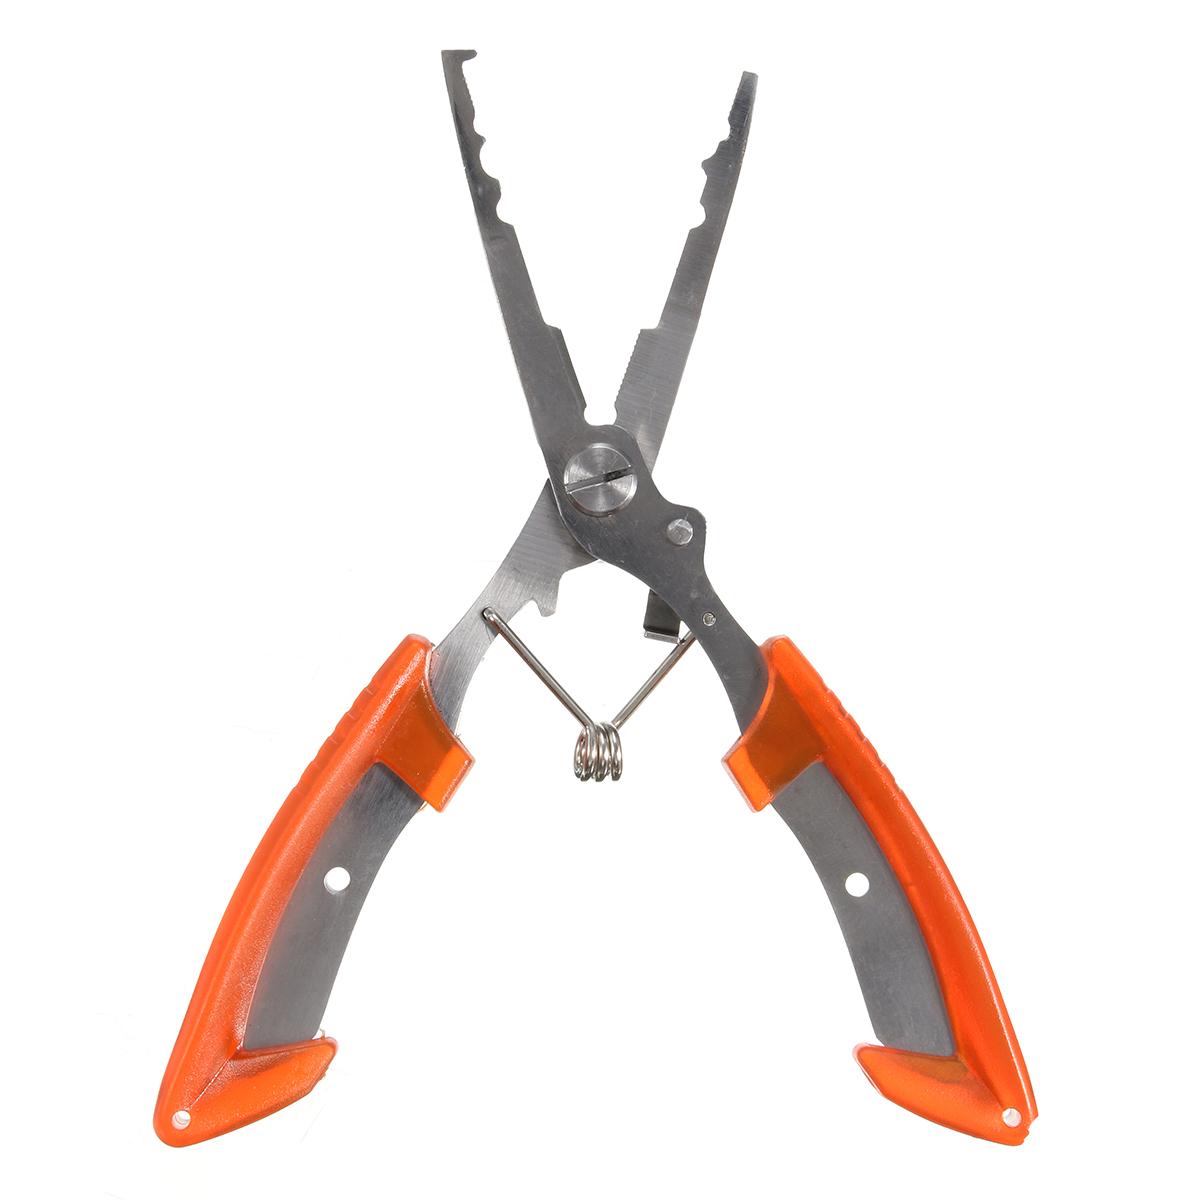 Stainless-Steel-Fishing-Pliers-Plierweiter-Scissors-Line-Cutter-Hook-Tackle-Tool-1151463-7